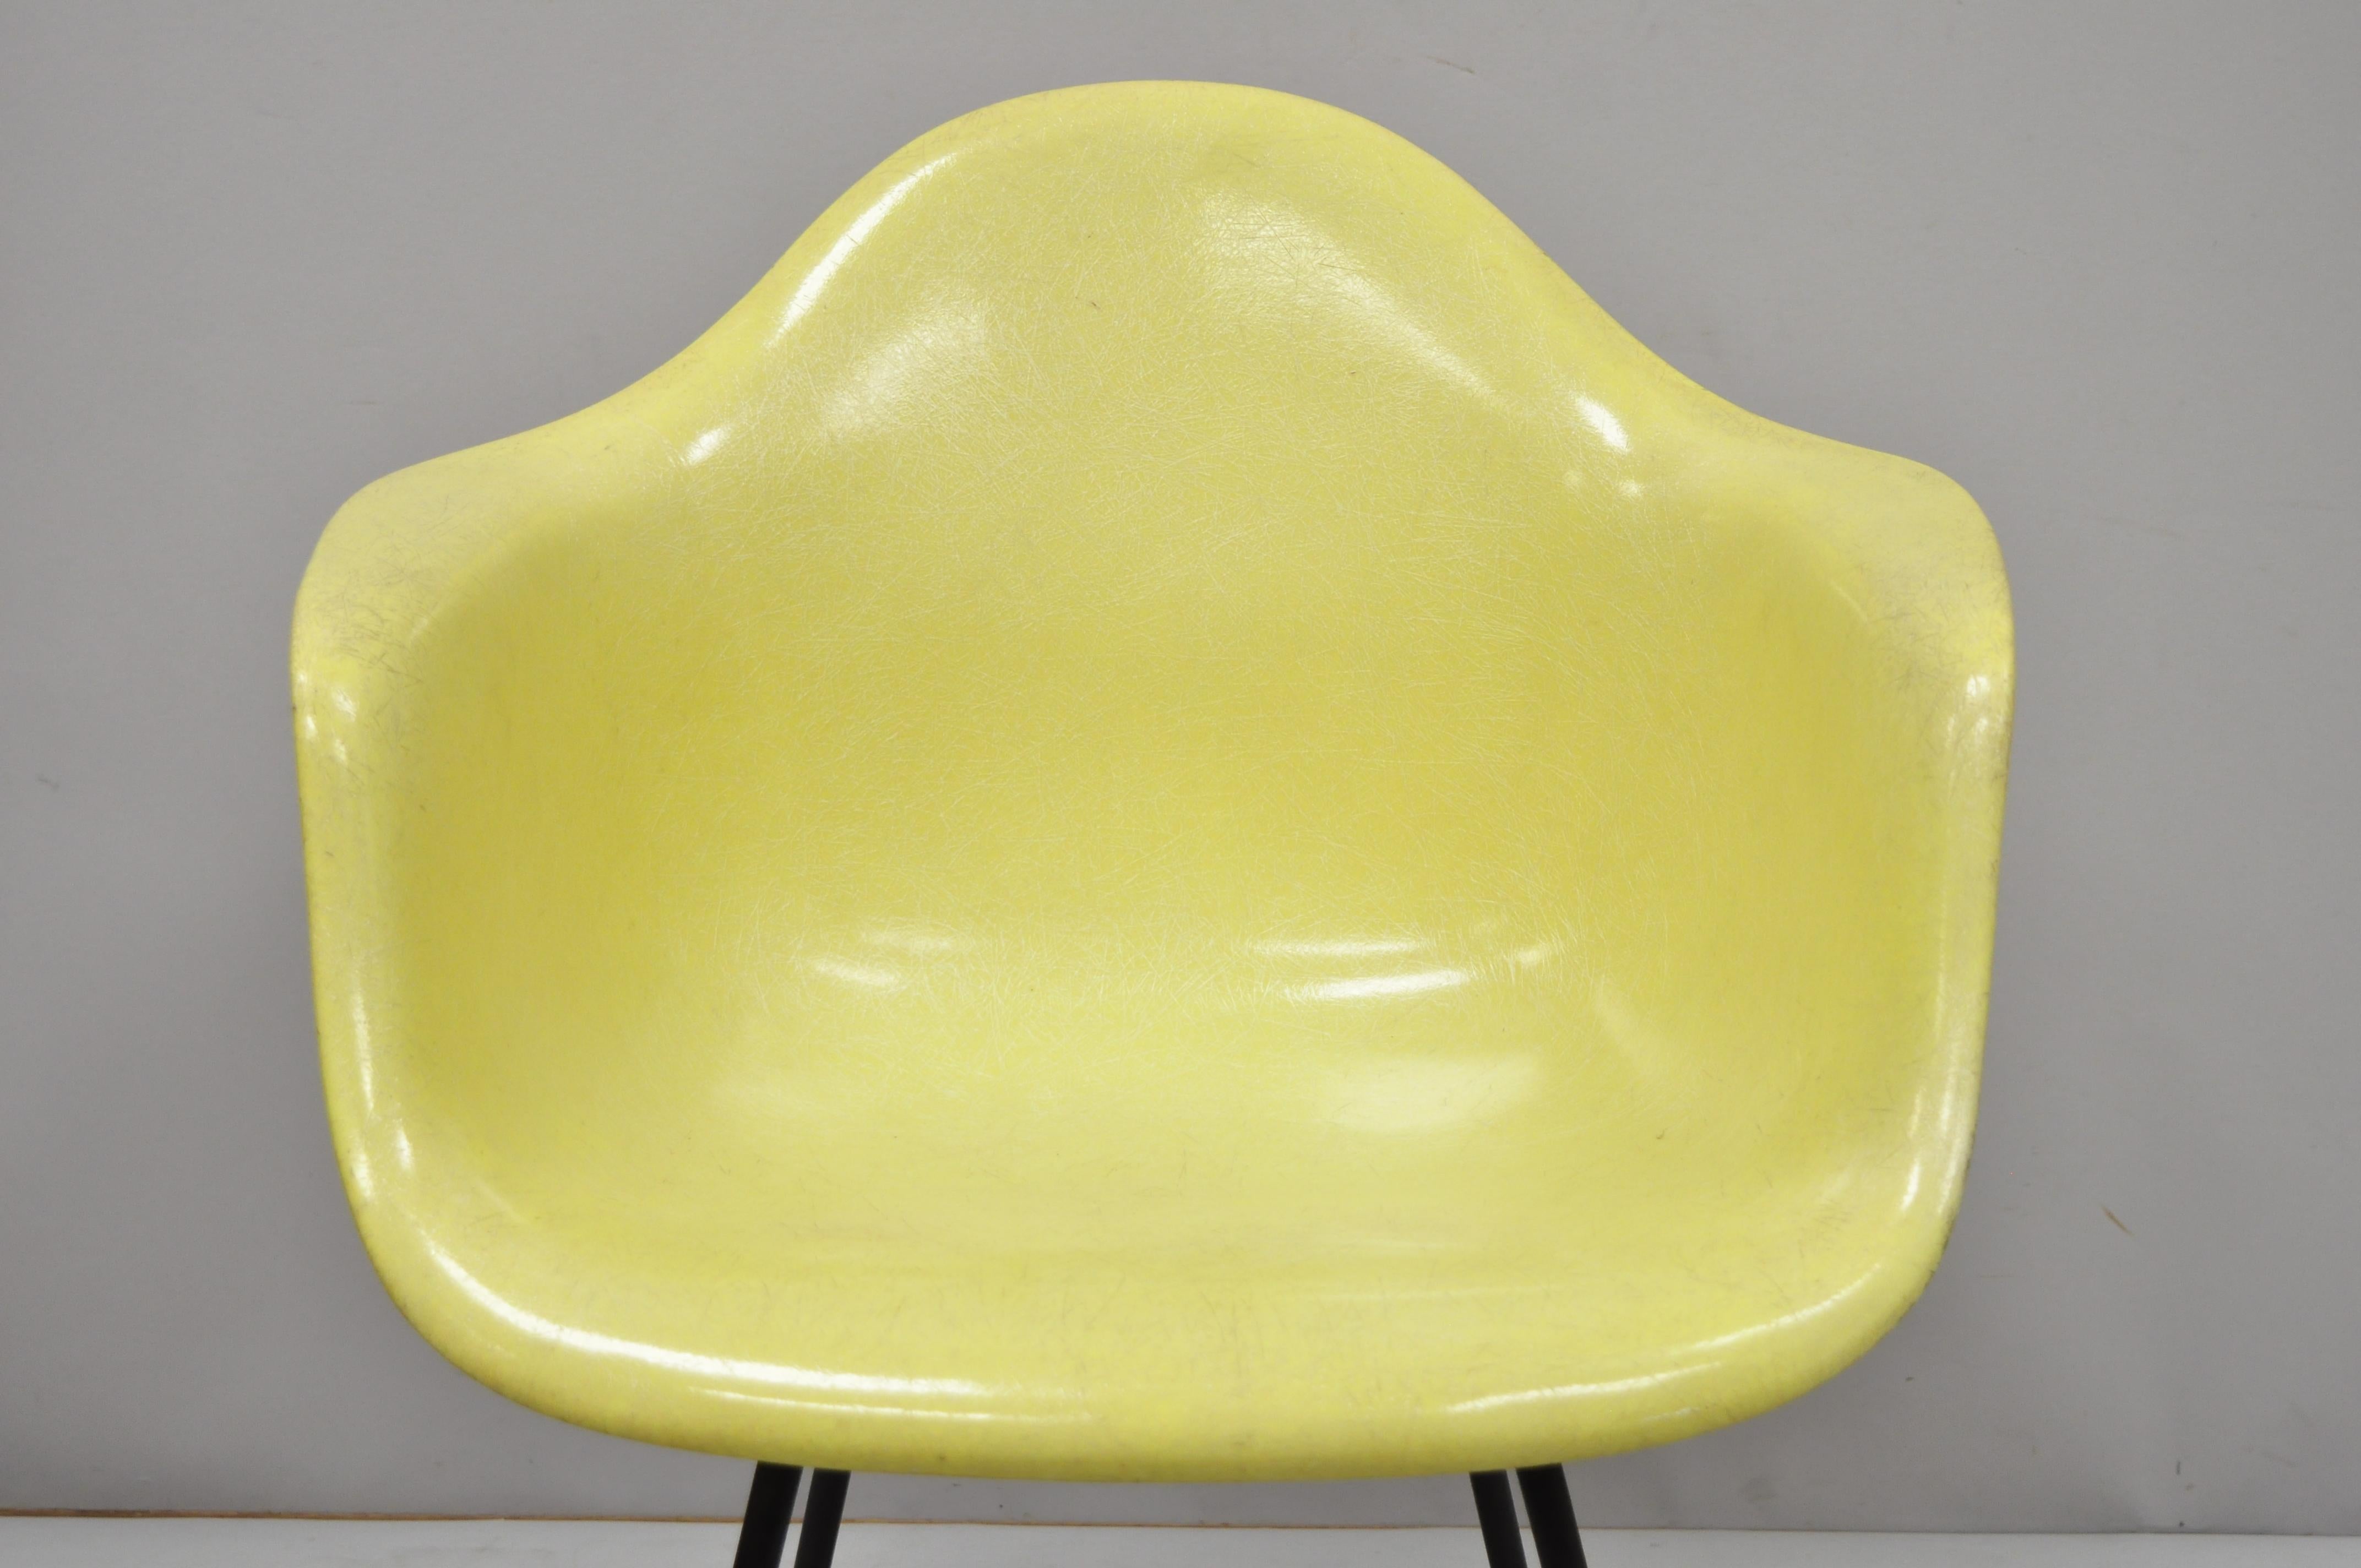 Vintage Herman Miller yellow fiberglass shell armchair H base (B). Item includes a yellow fiberglass shell, metal H-frame base, very nice vintage item, quality American craftsmanship, no remaining label, circa mid-20th century. Measurements: 27